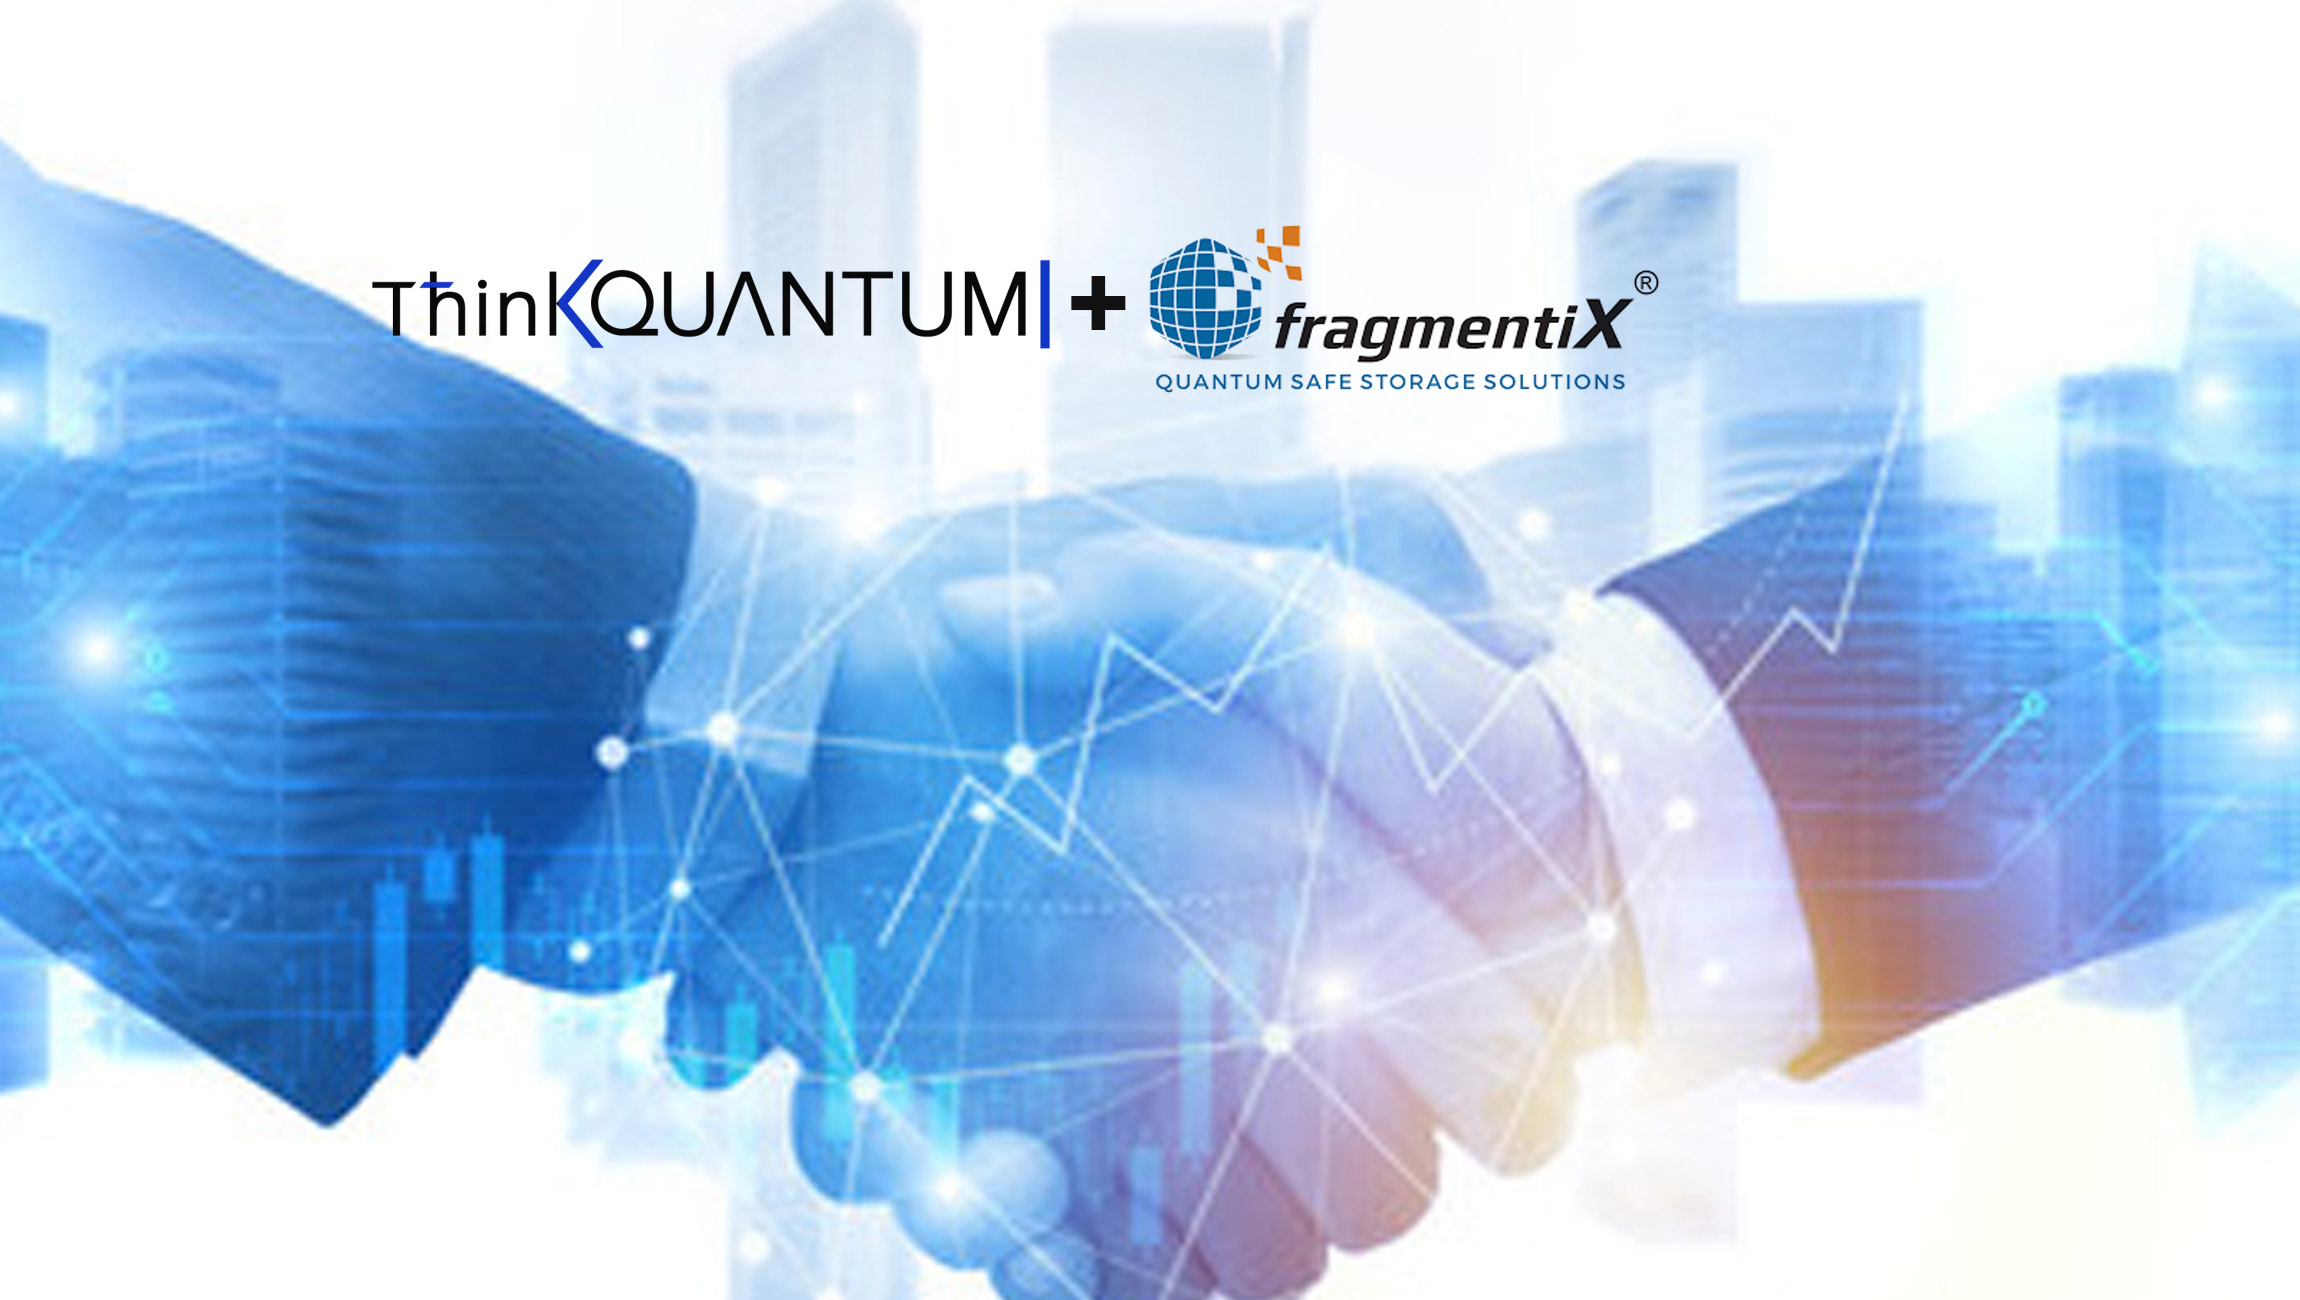 Partnership between THINKQUANTUM and fragmentiX